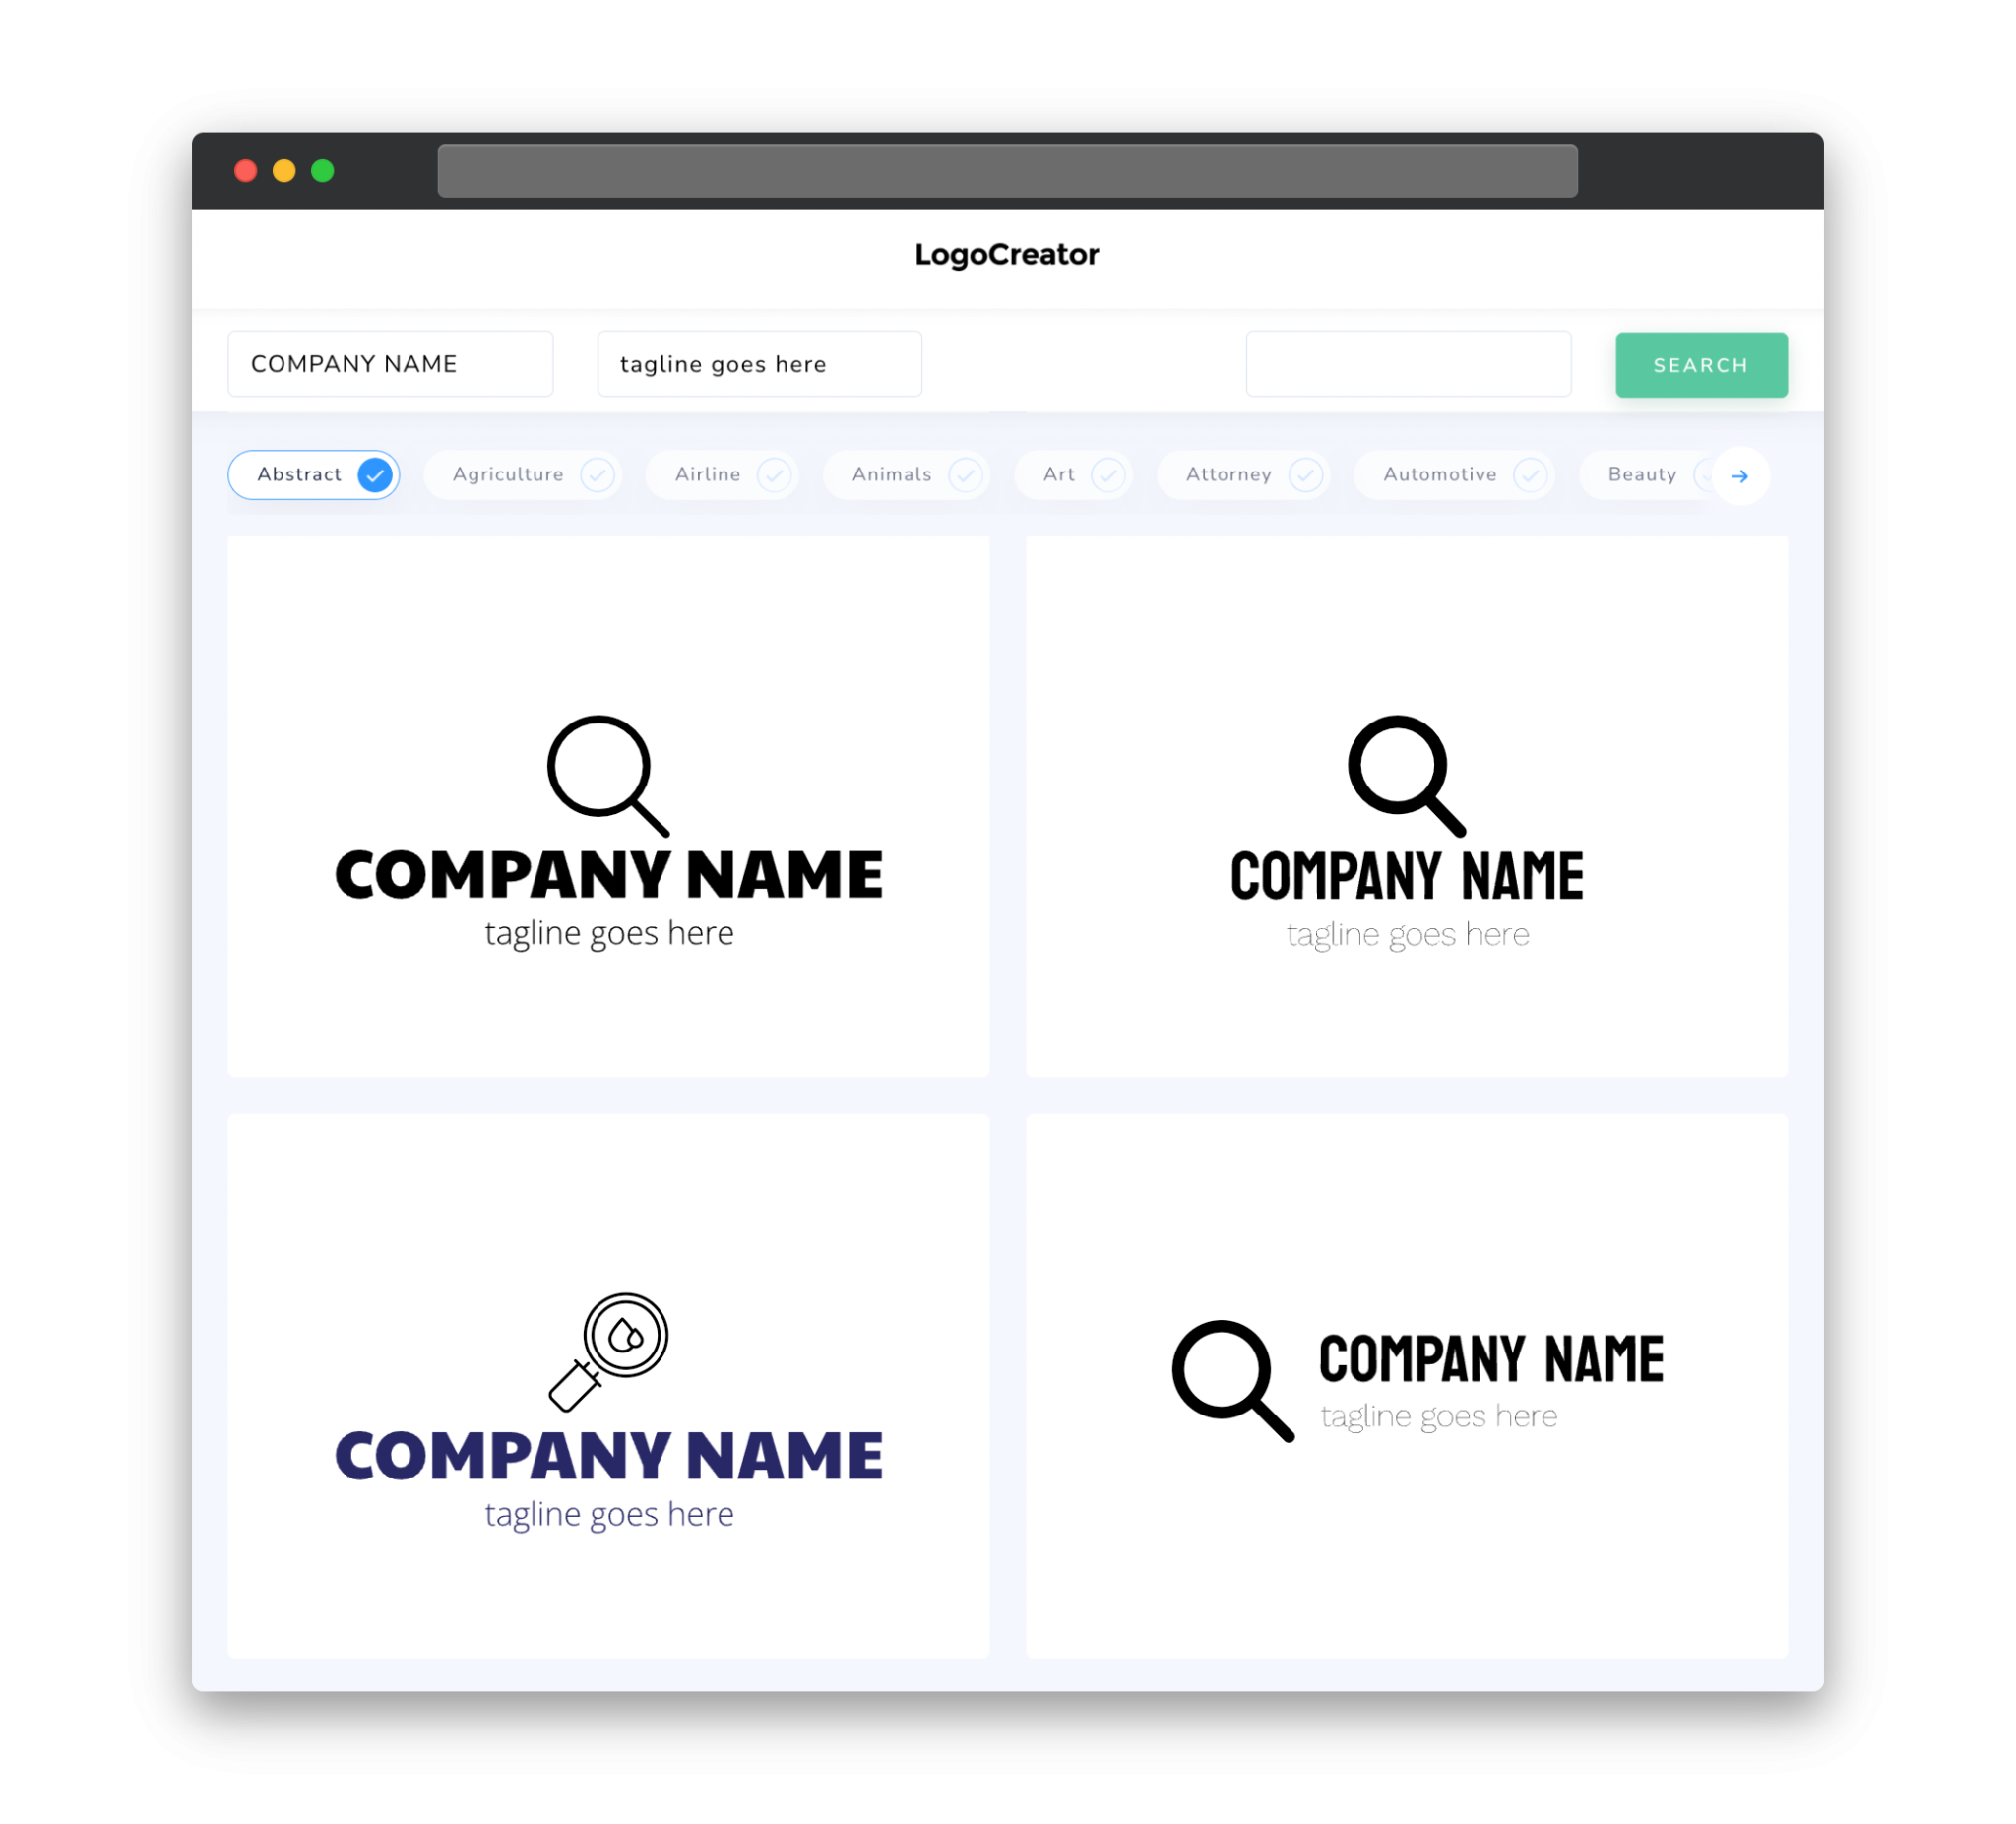 Search Logo Design: Create Your Own Search Logos